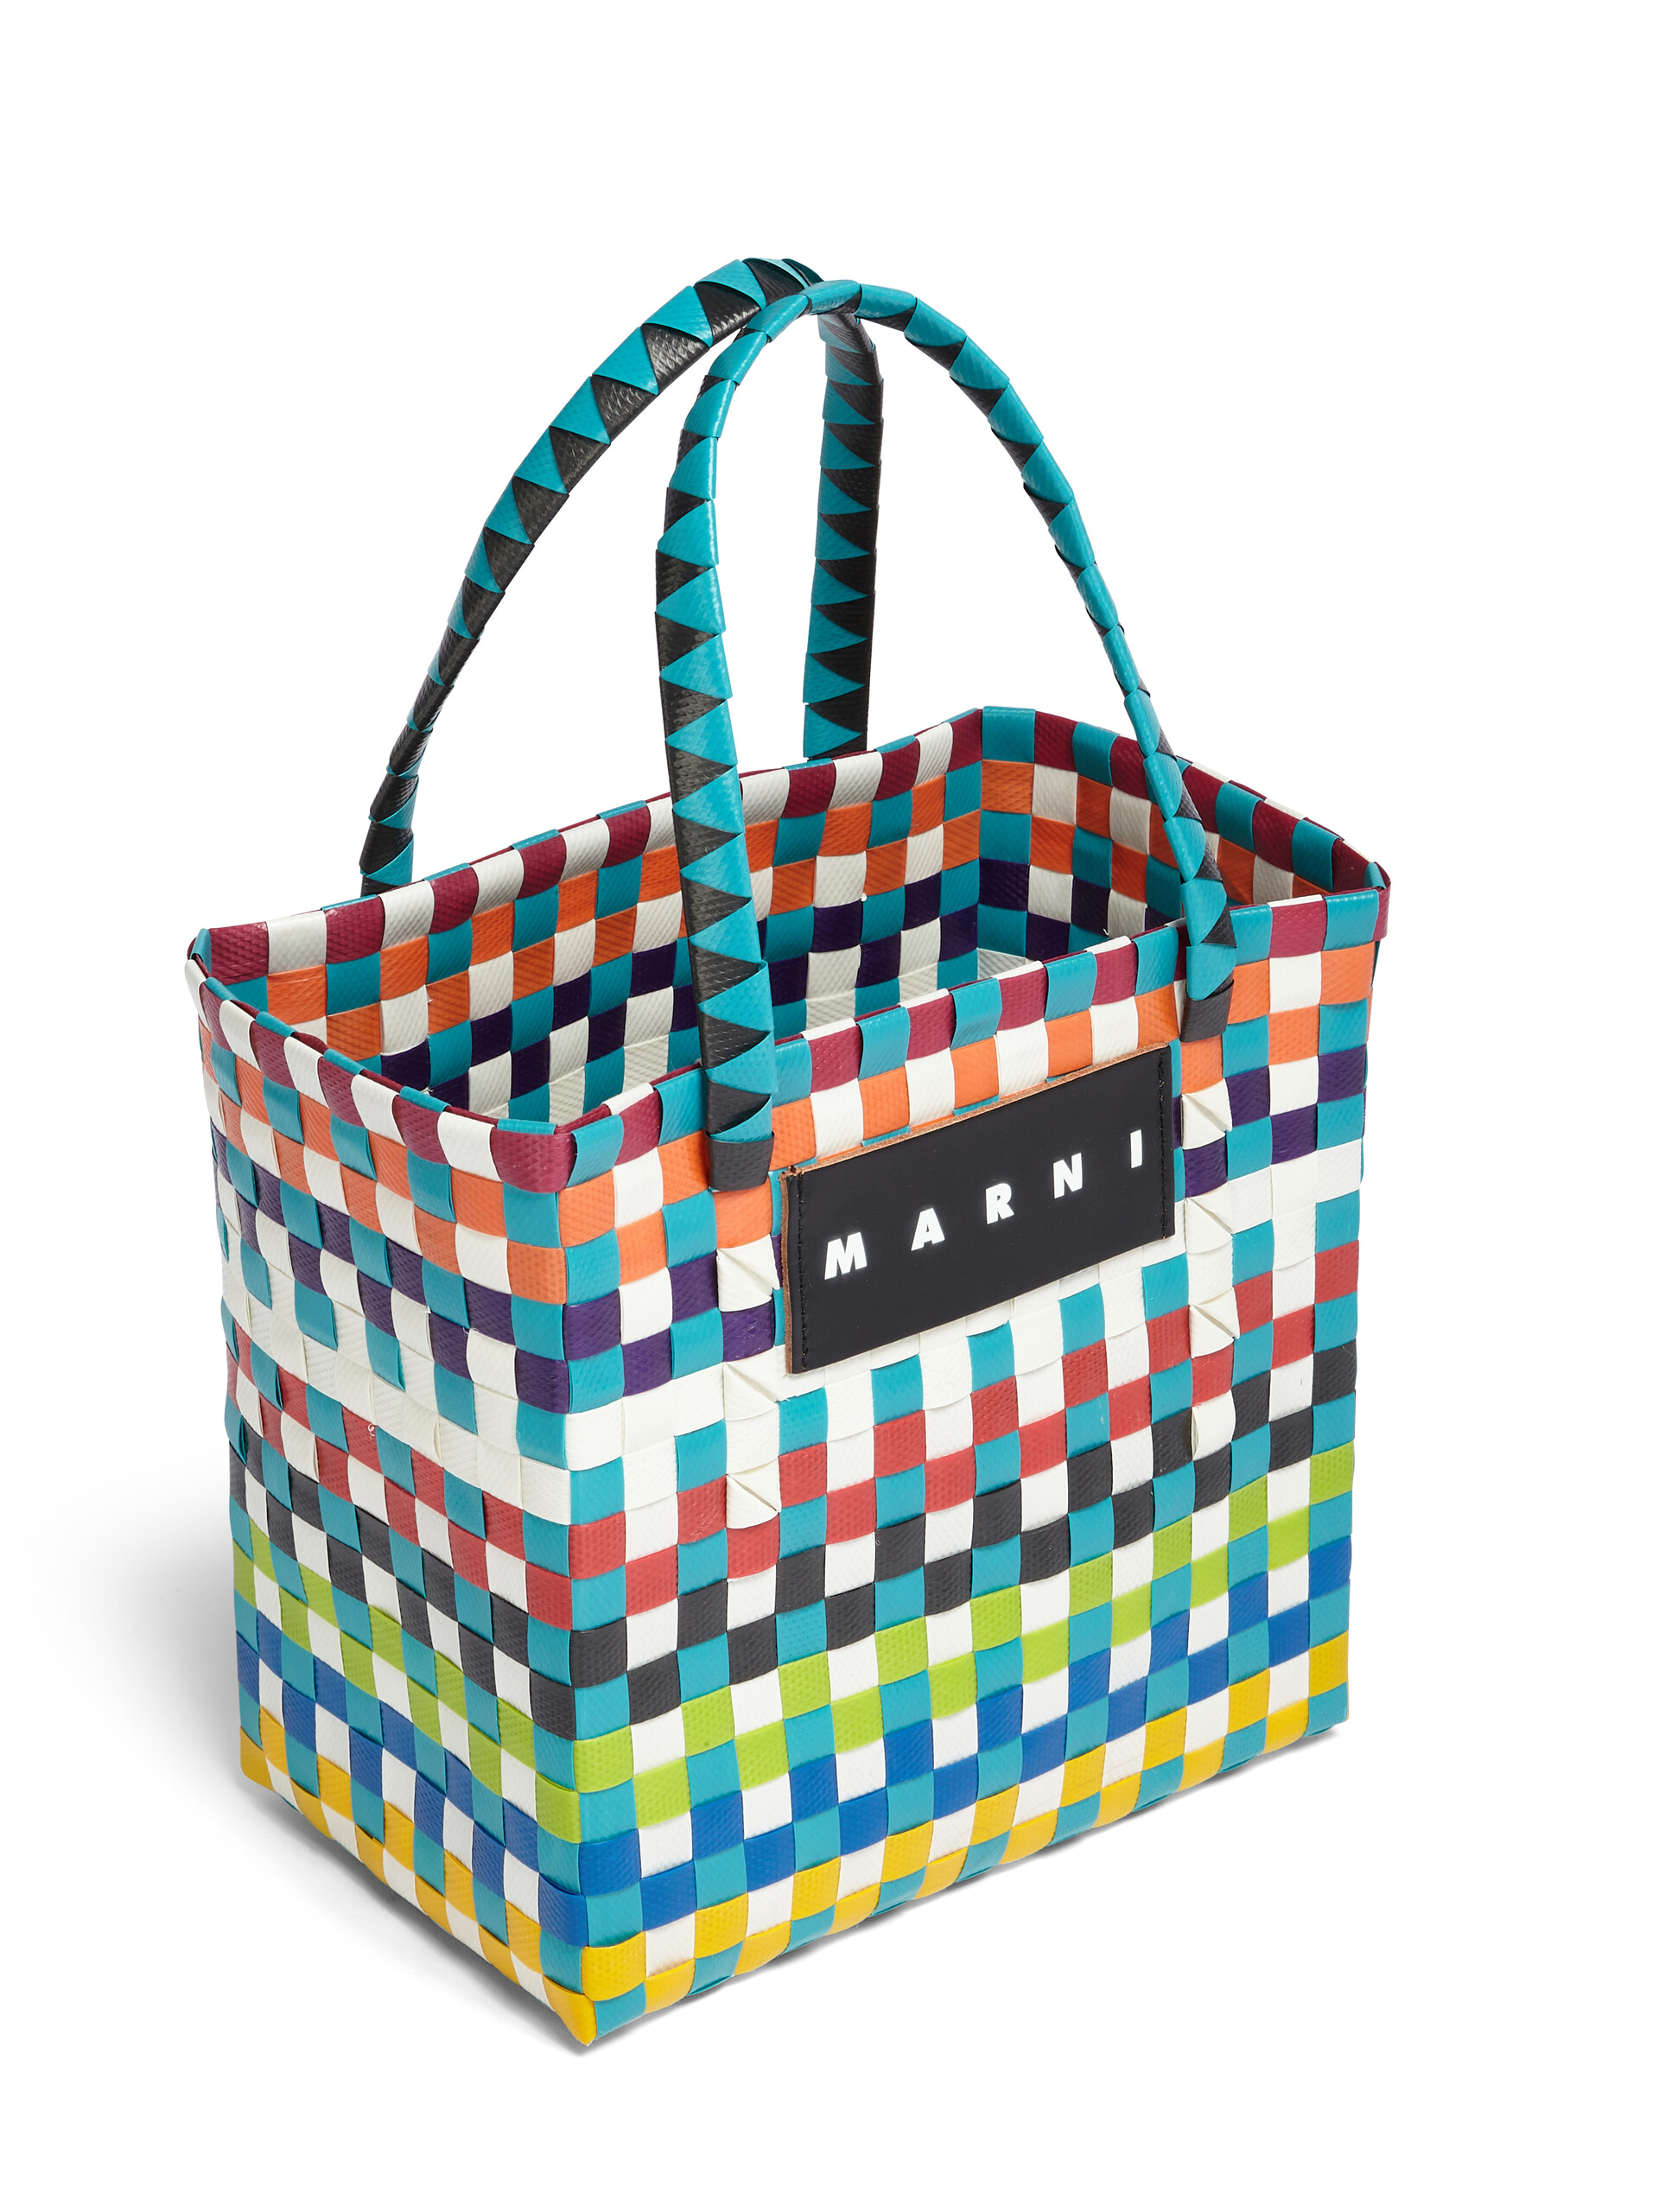 MARNI MARKET BASKET bag in multicolor woven material - Bags - Image 4